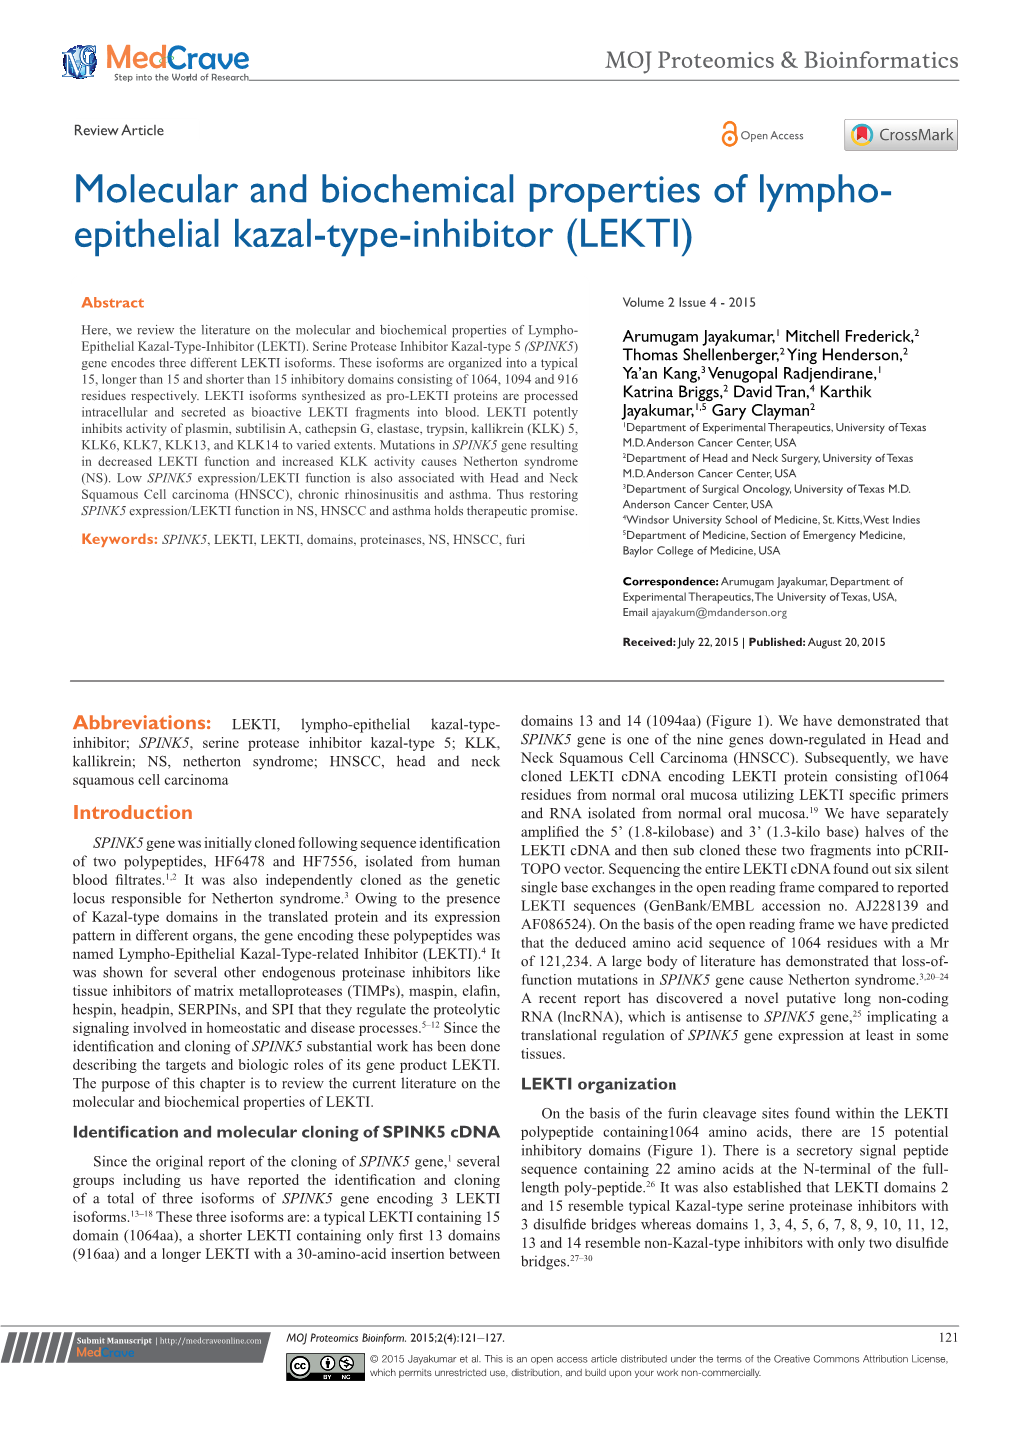 Molecular and Biochemical Properties of Lympho-Epithelial Kazal-Type-Inhibitor (LEKTI) ©2015 Jayakumar Et Al